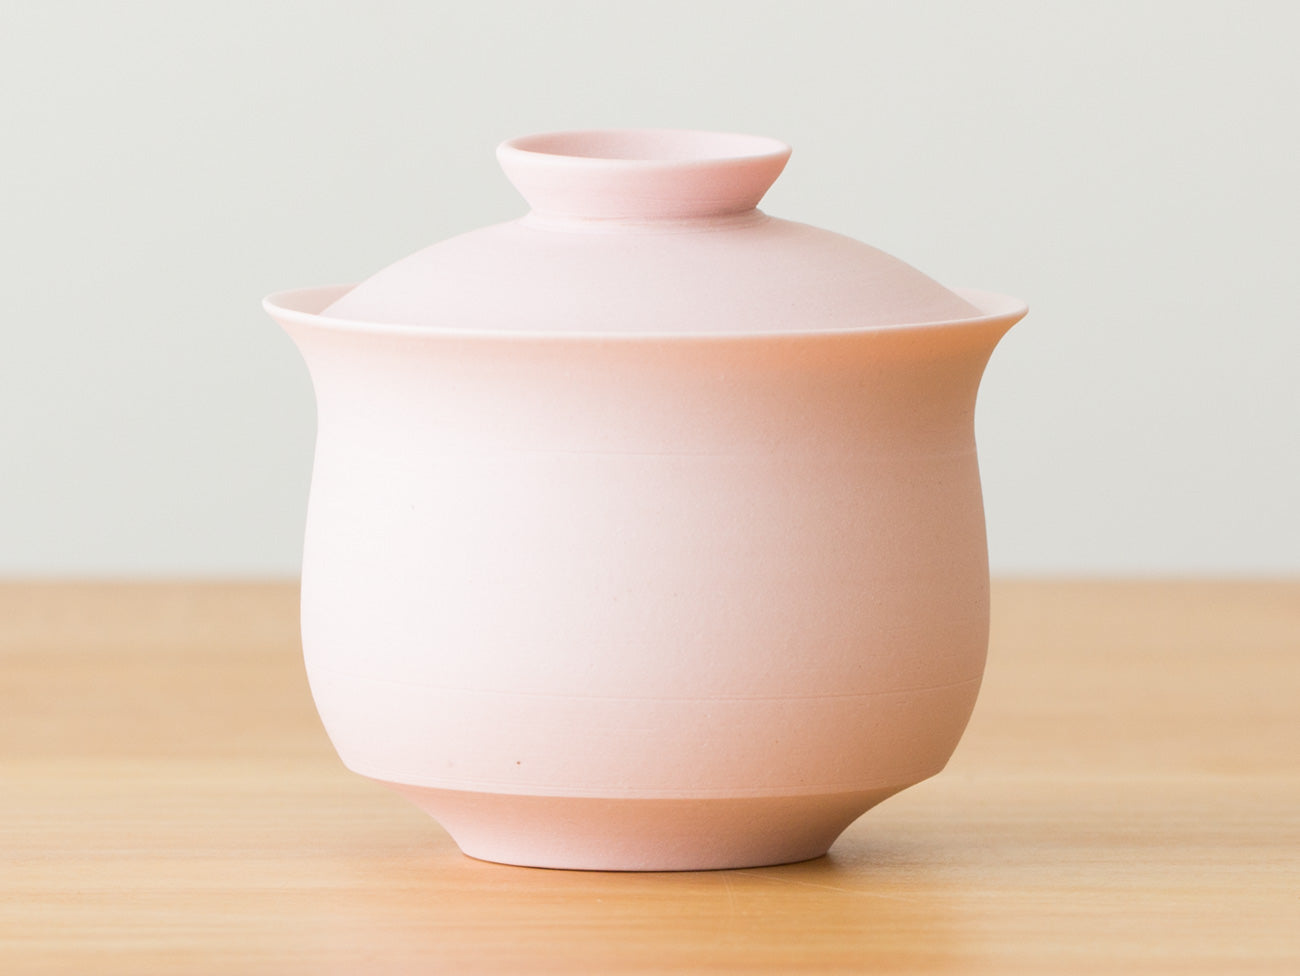 Pink Porcelain Gaiwan